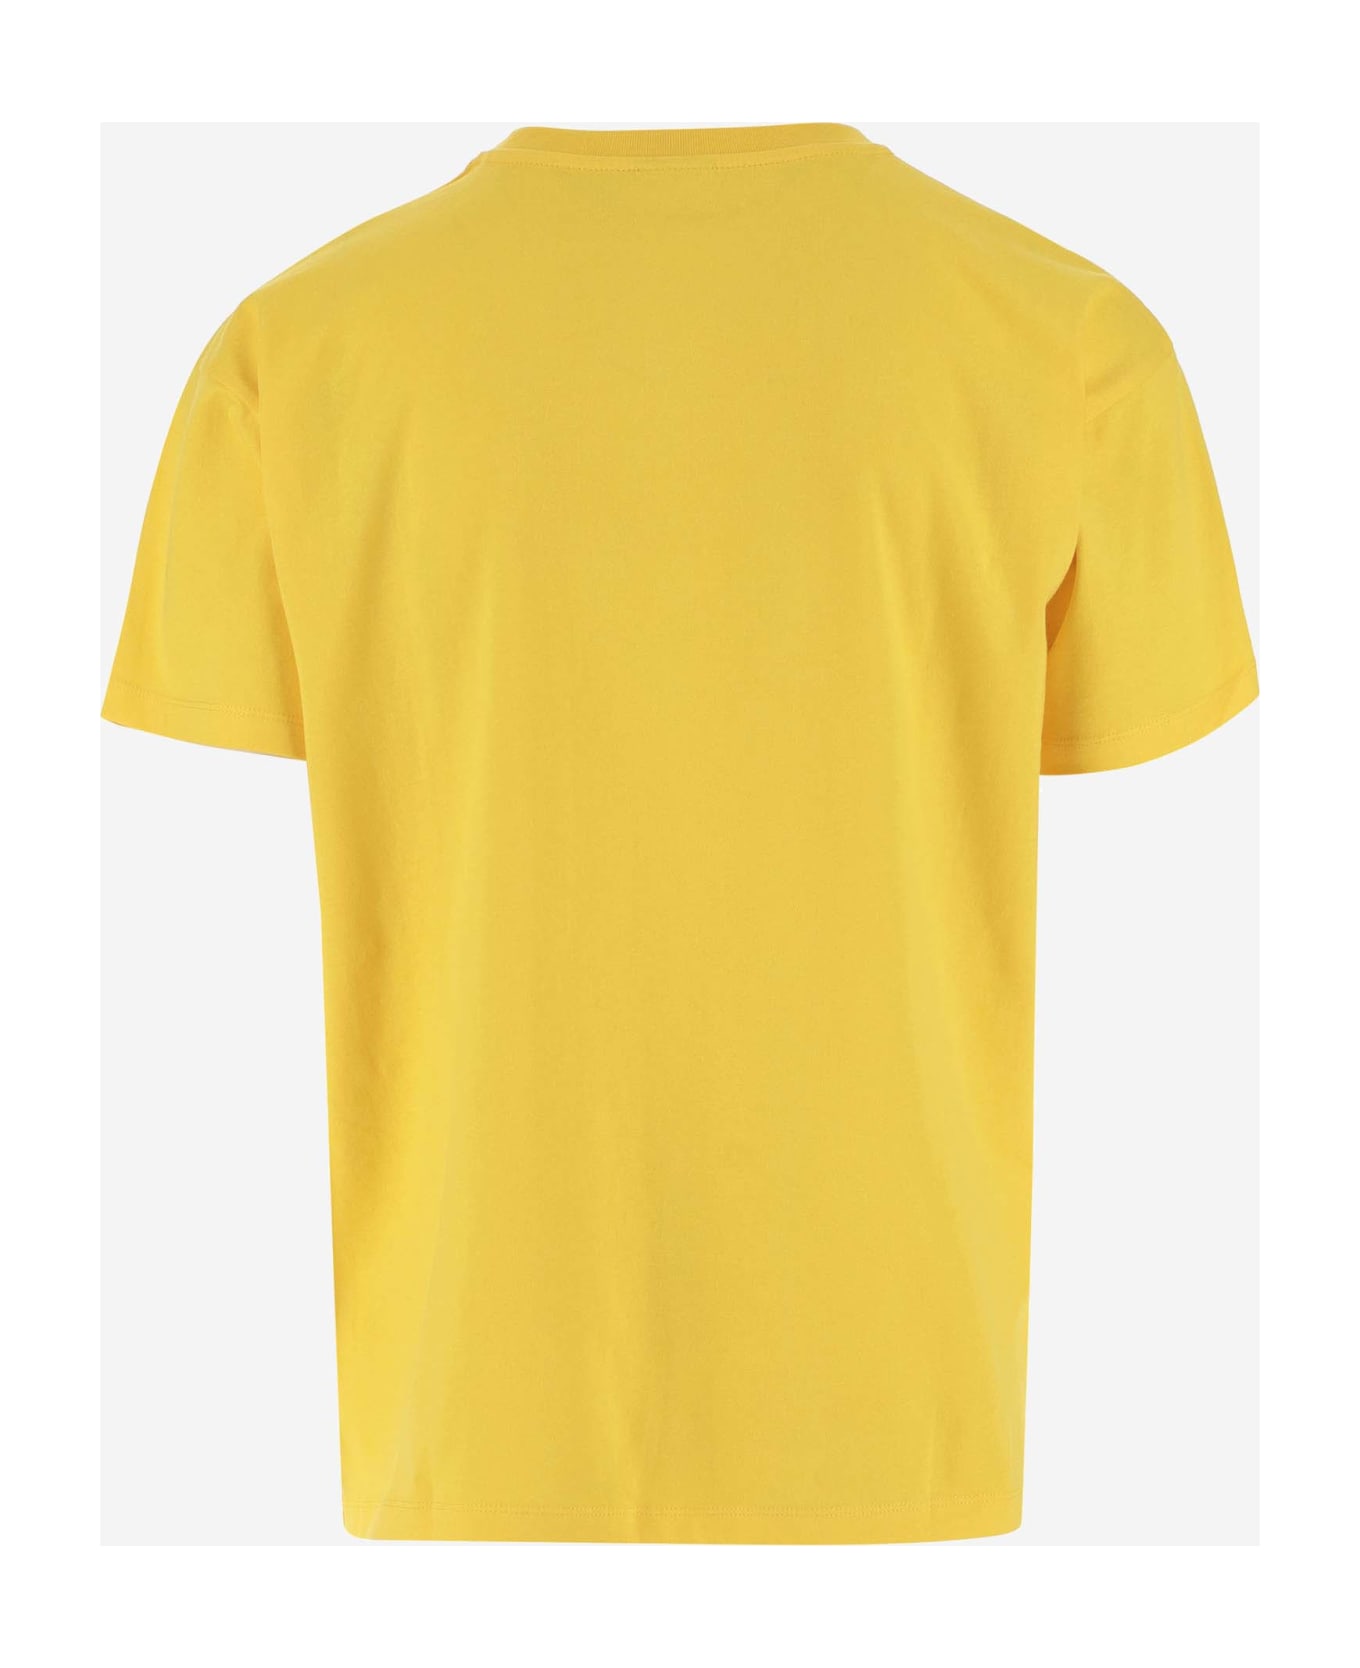 Sky High Farm Cotton T-shirt With Logo - Yellow